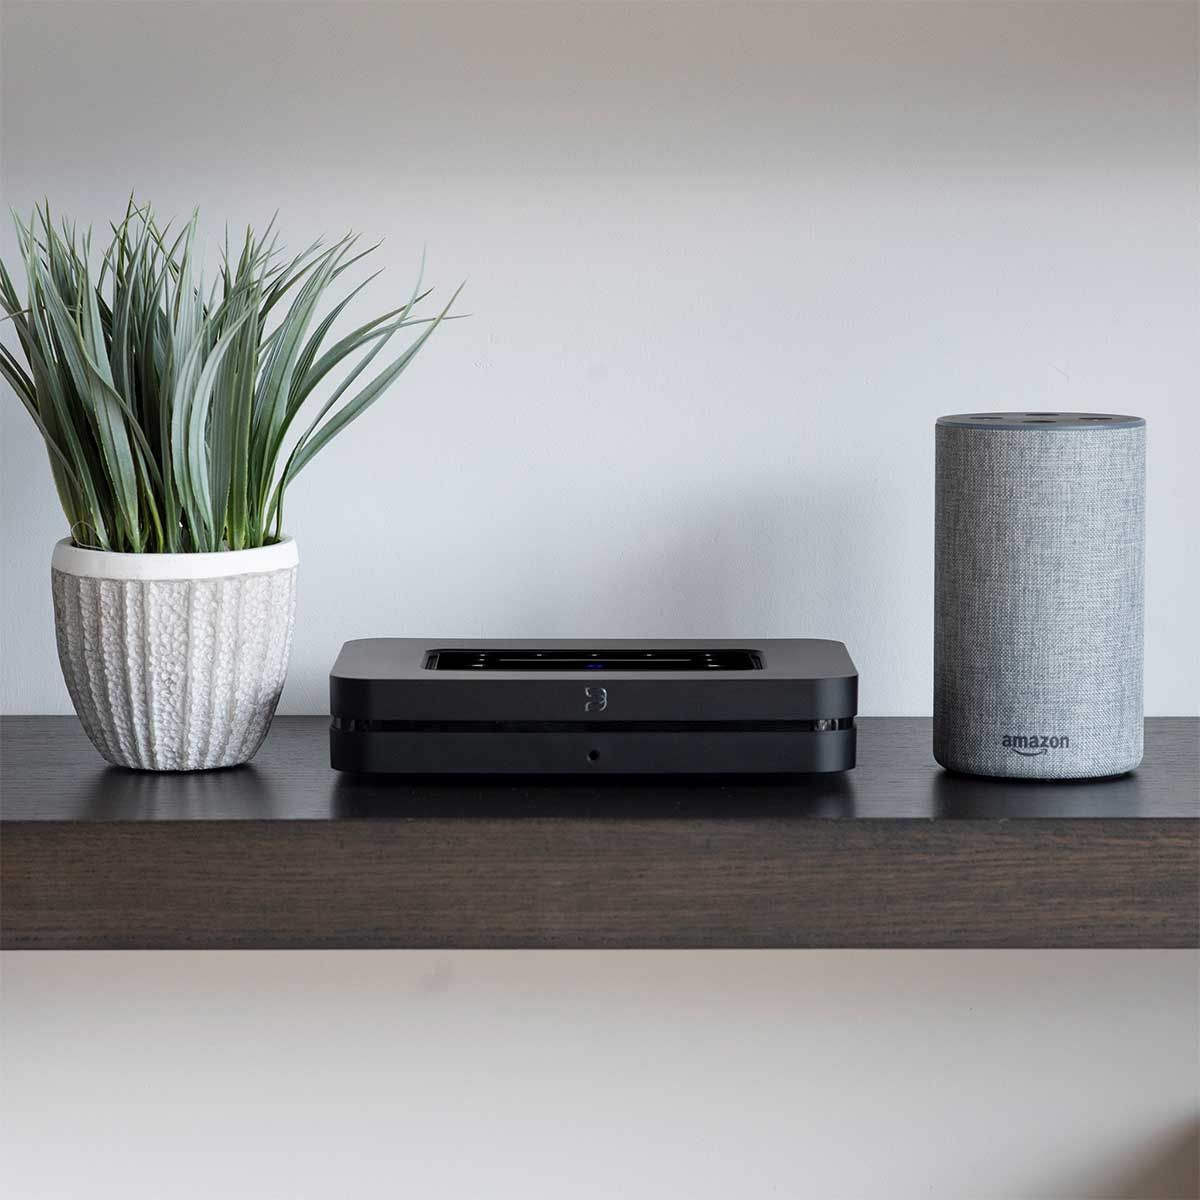 Bluesound Node Wireless Streamer, Black, nestled between a plant and and Amazon Alexa speaker